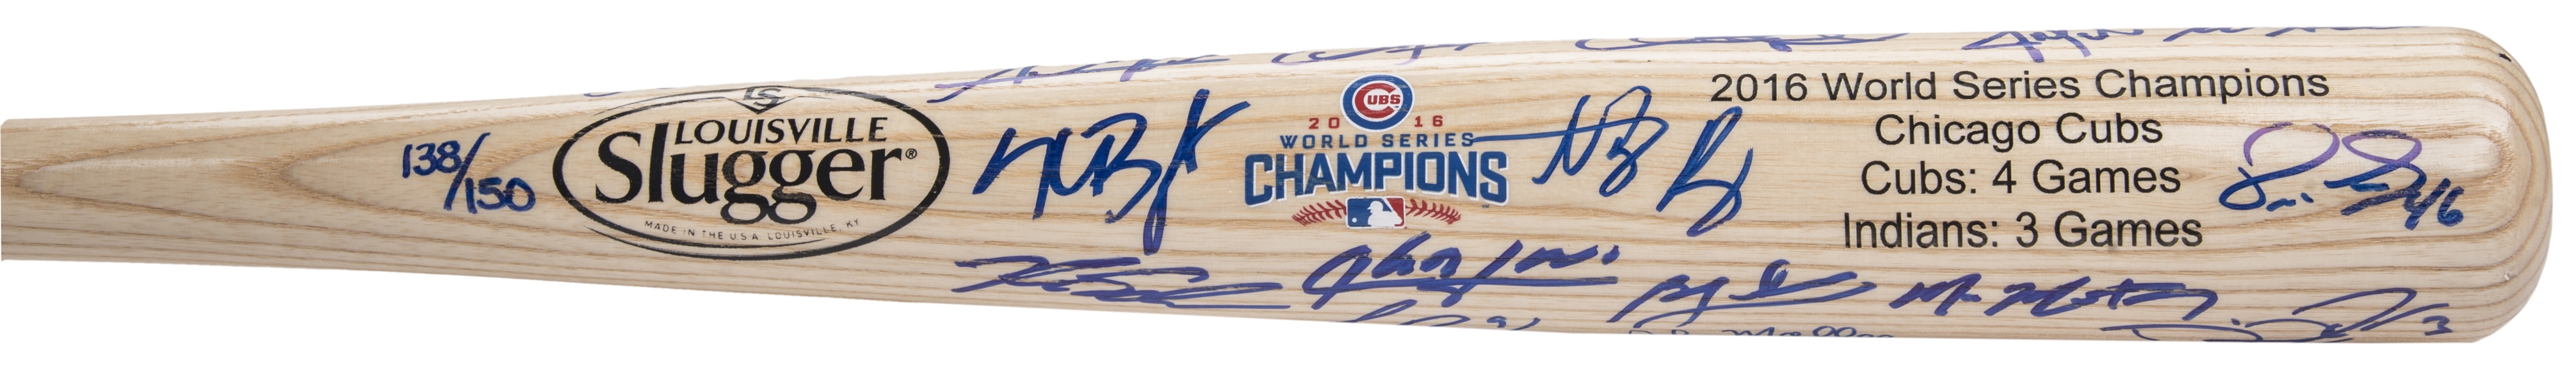 Framed Chicago Cubs 2016 World Series Champions Facsimile Signature Team  Auto 16x24 Baseball Photo - Hall of Fame Sports Memorabilia